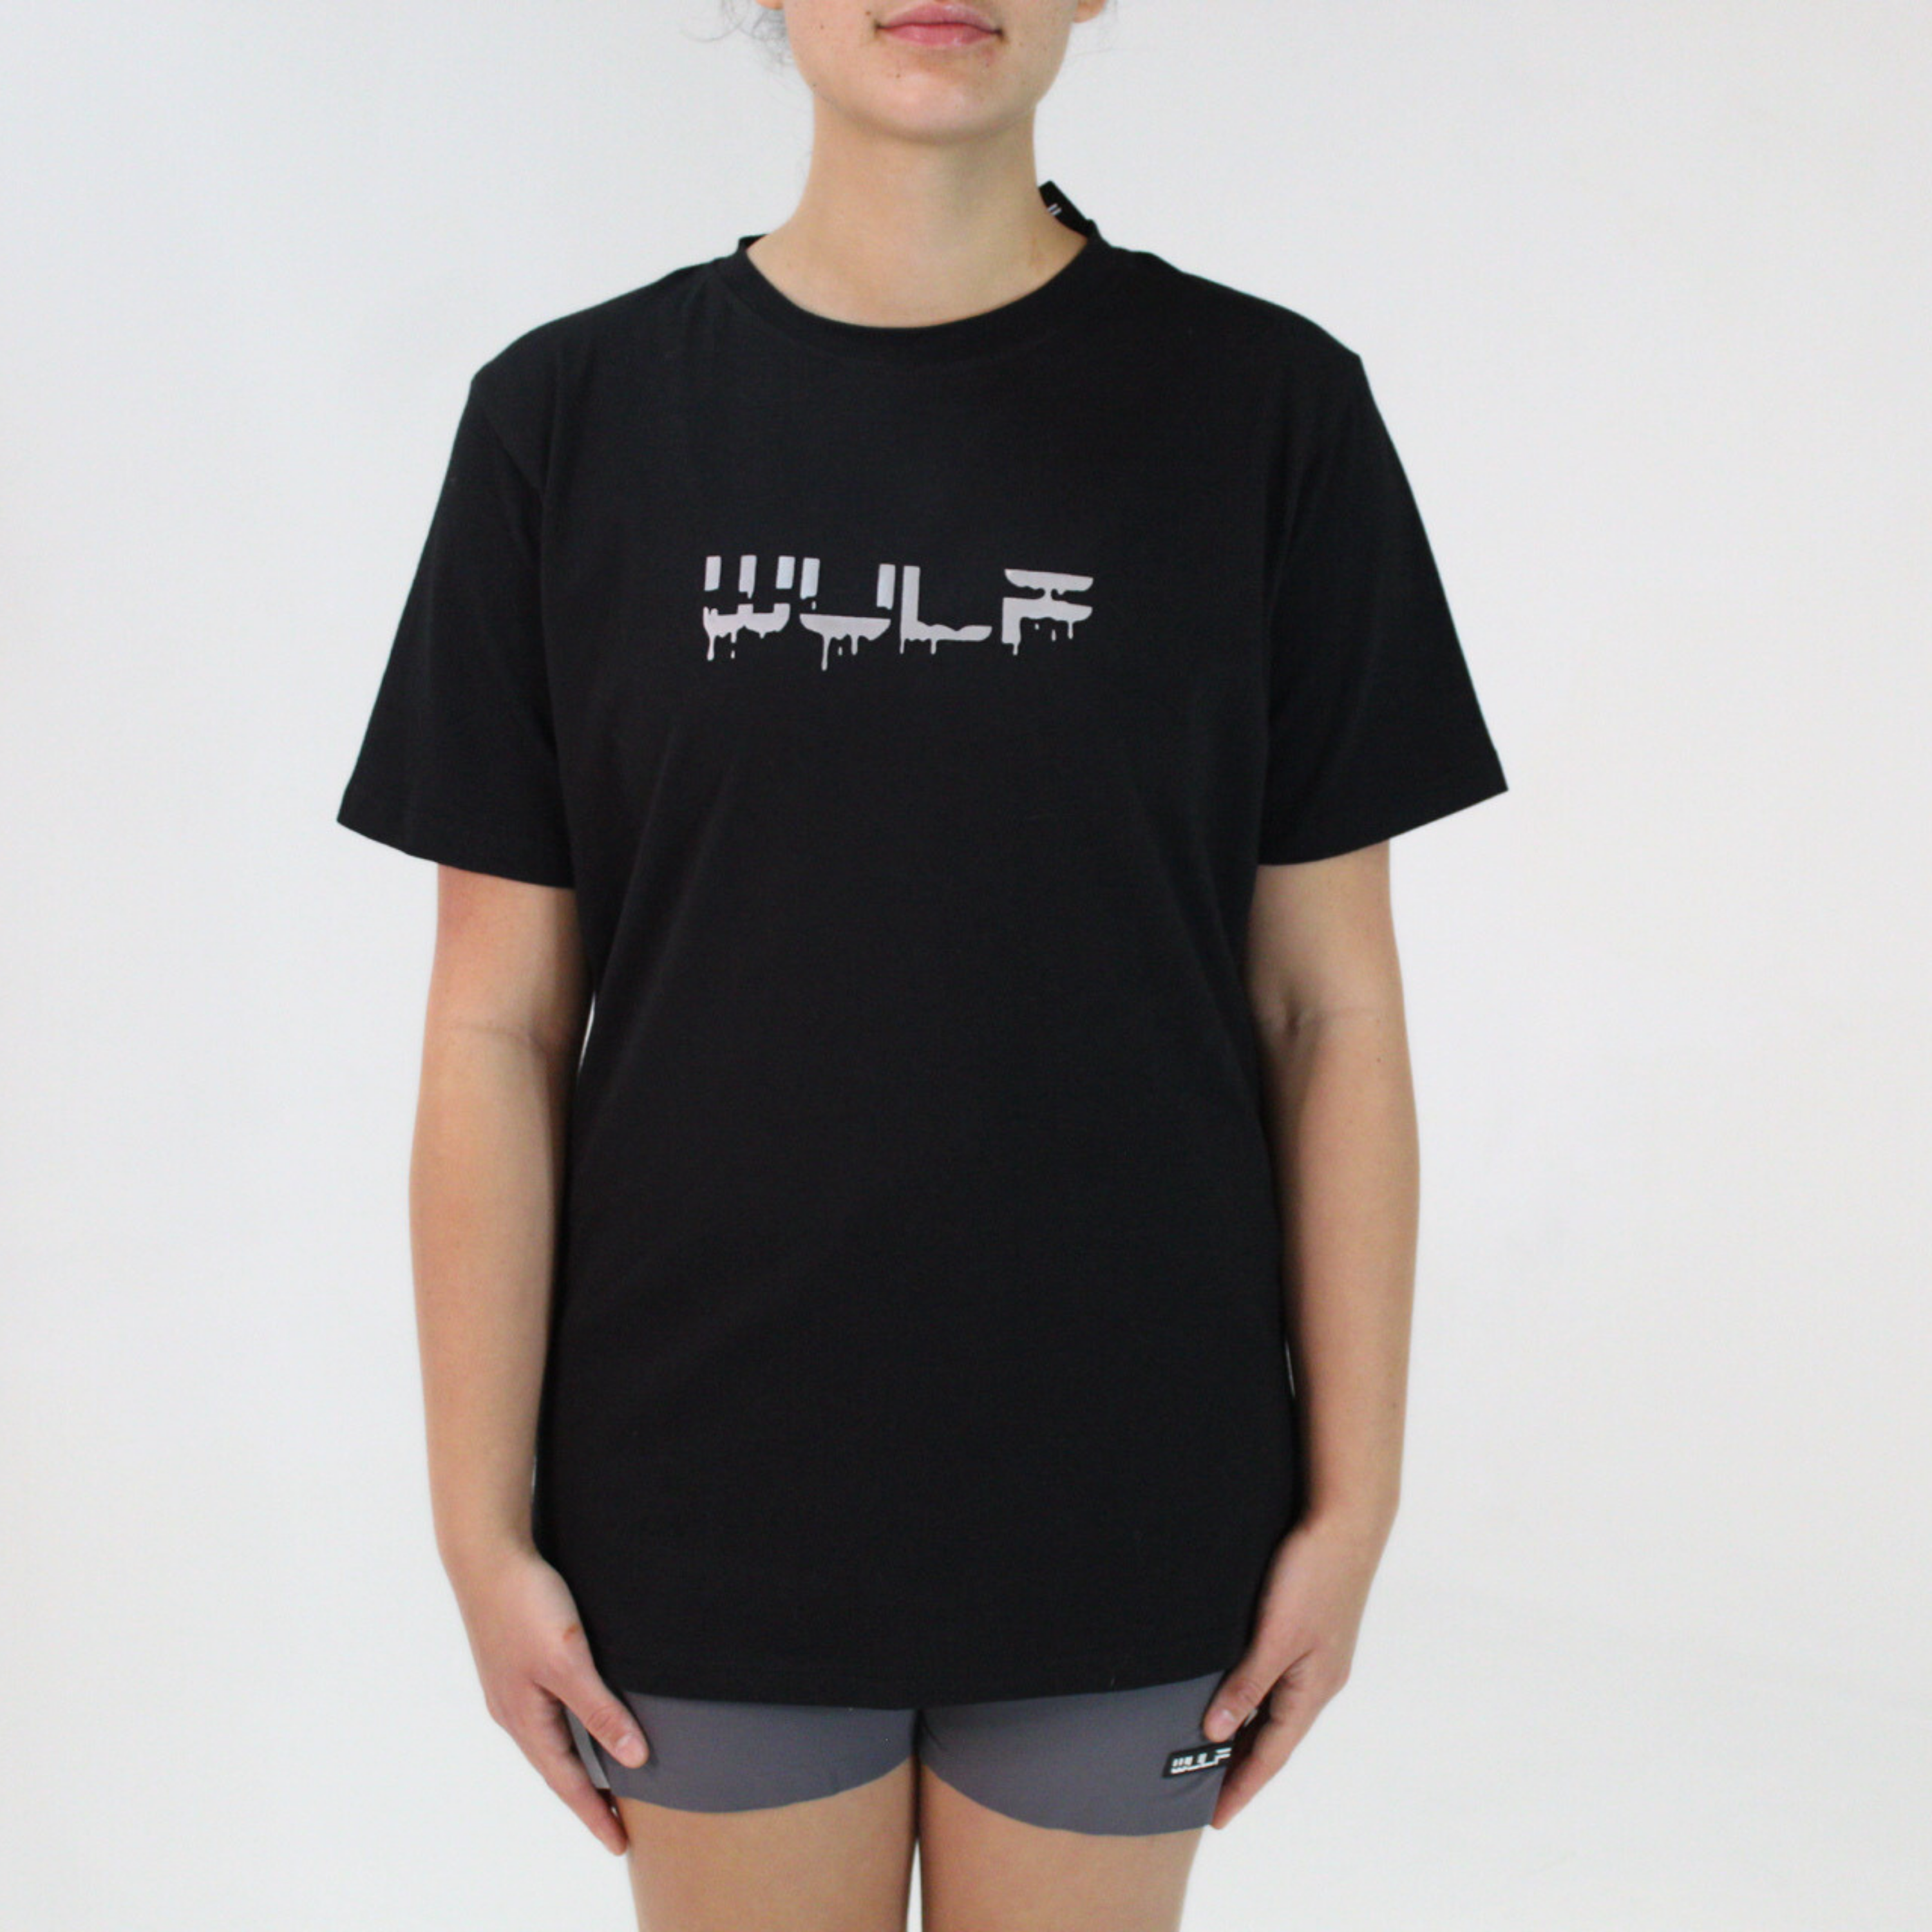 Men’s T-Shirt Black with Wulf Drip Logo